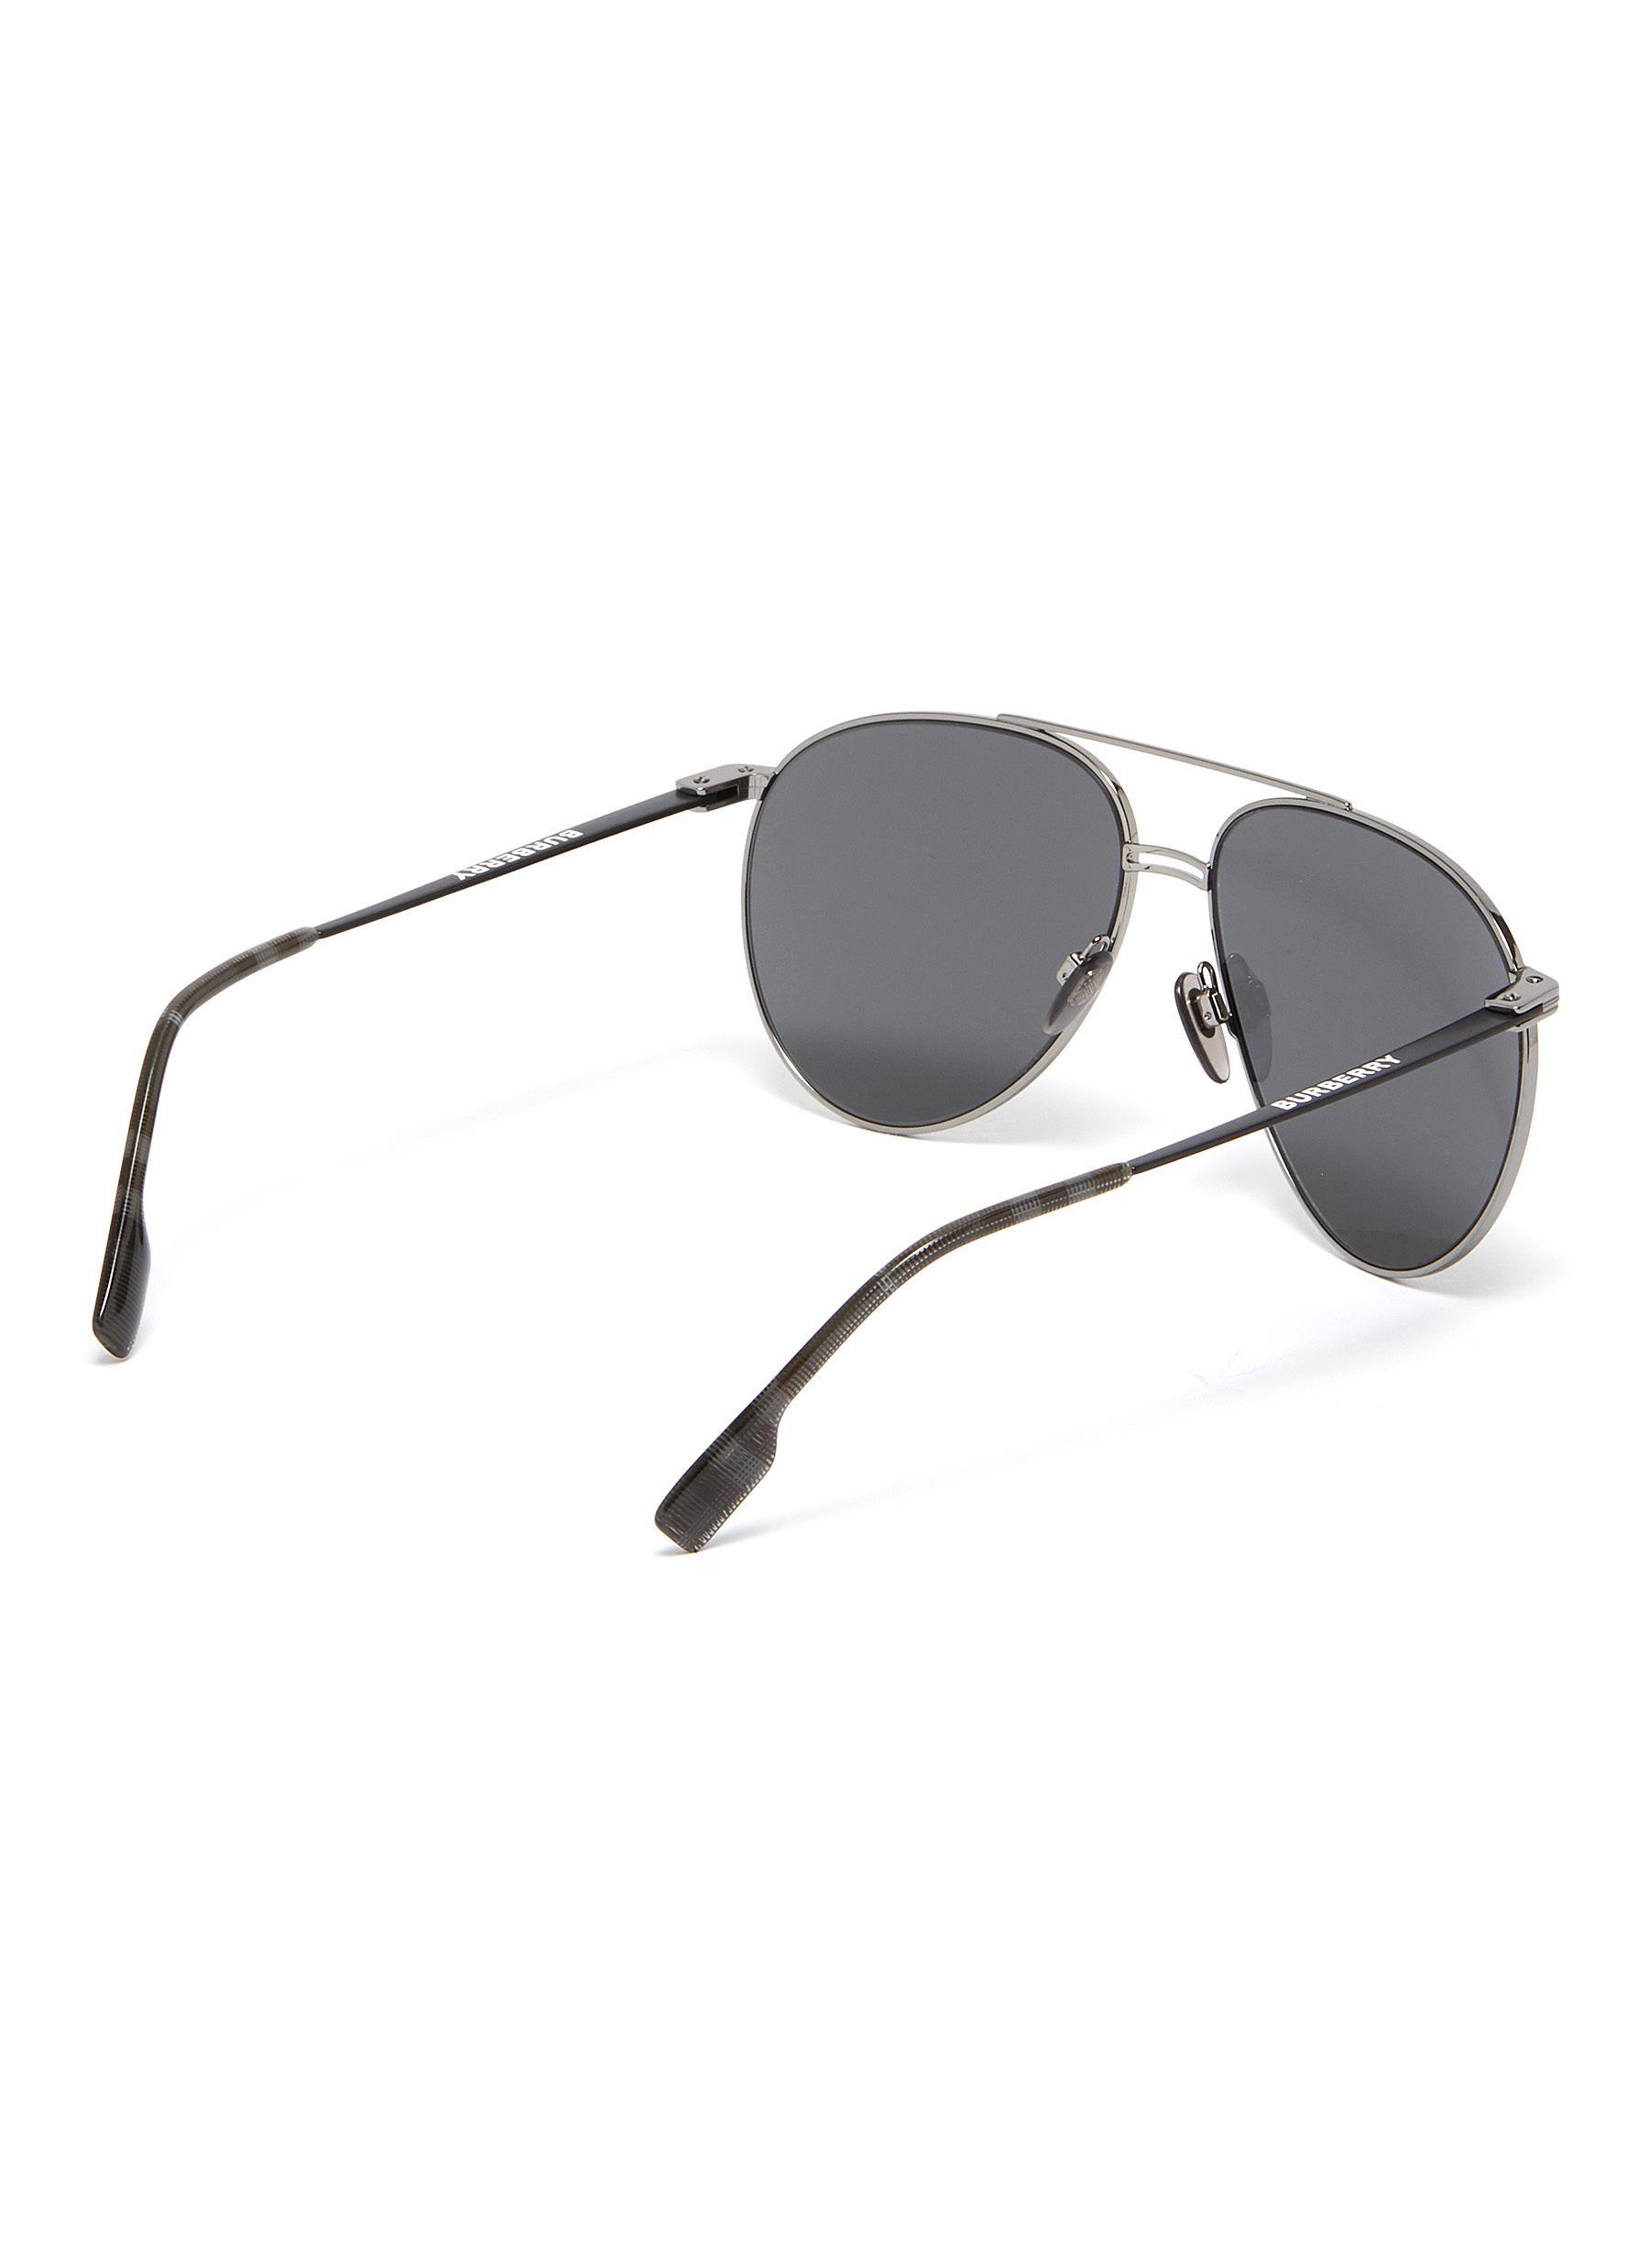 Burberry Double Bridge Metal Frame Aviator Sunglasses in Grey (Gray ...